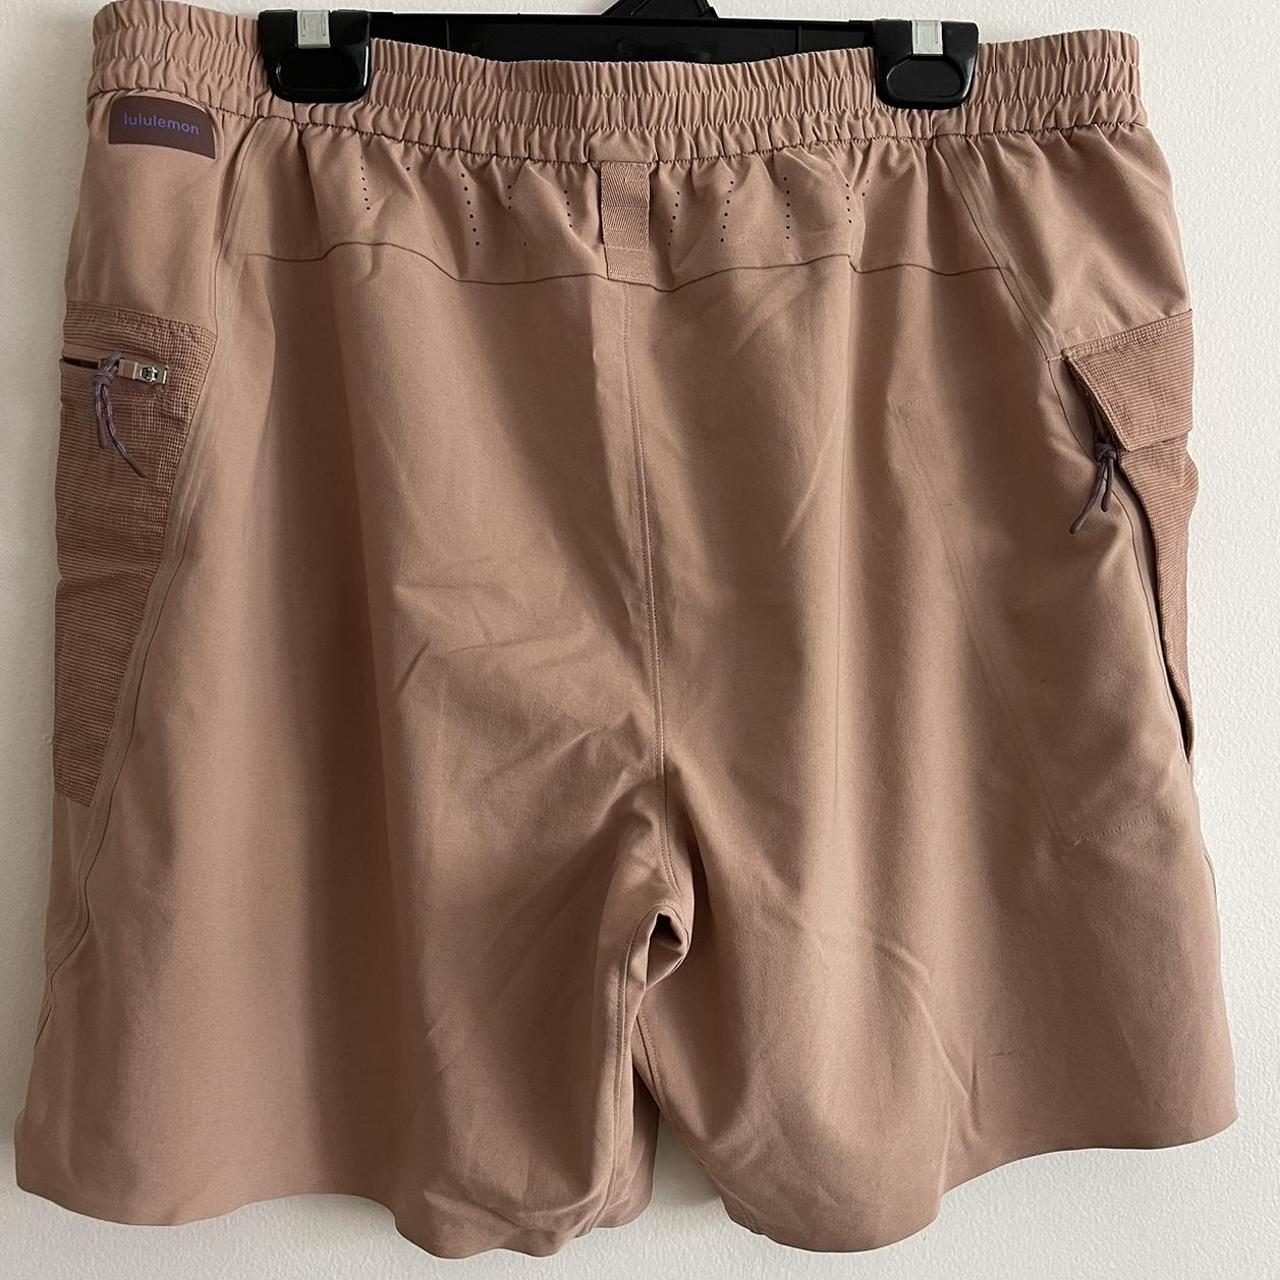 Lululemon Men's Pink and Grey Shorts (2)